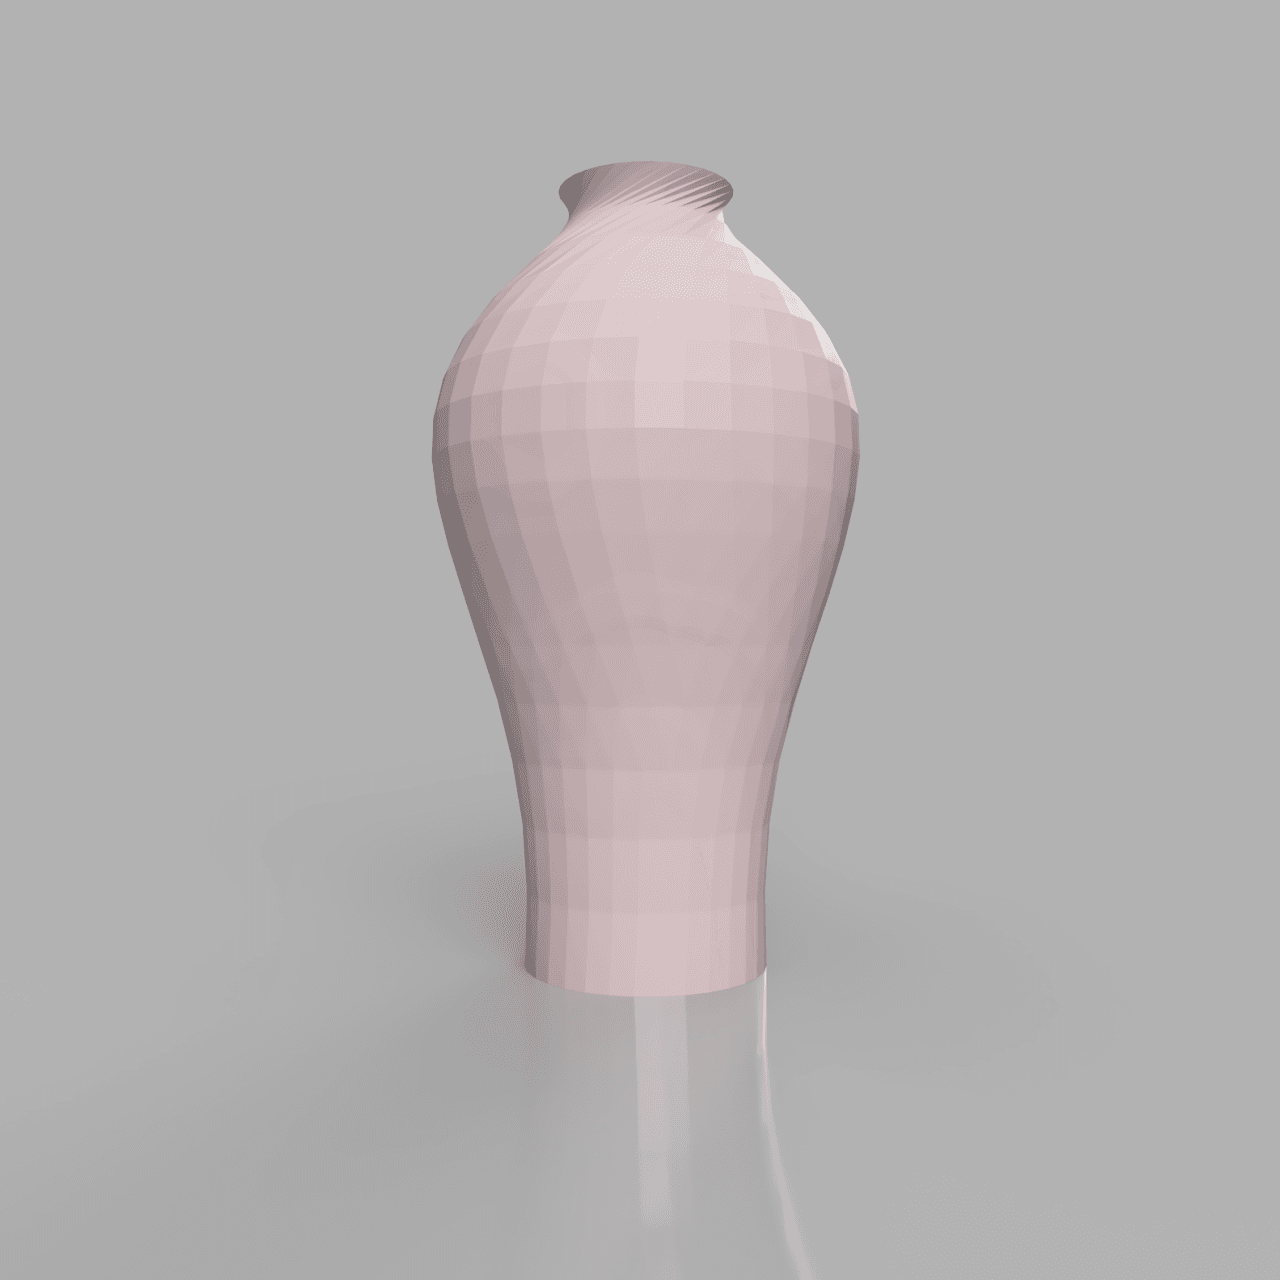 Tesselated vase 3d model